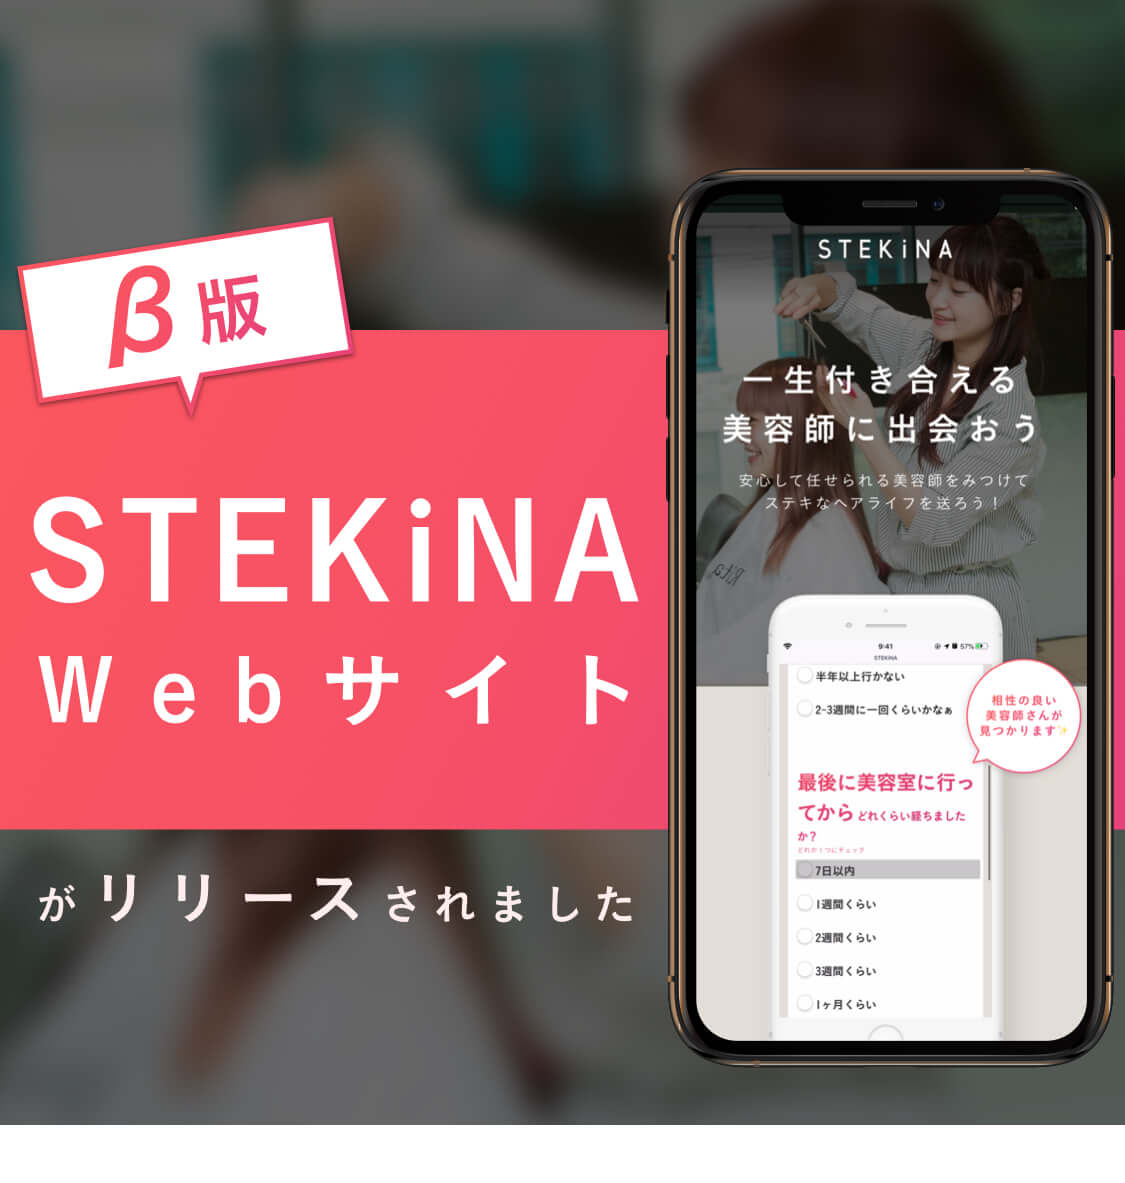 STEKiNA Webサイト(β版)がリリースされました